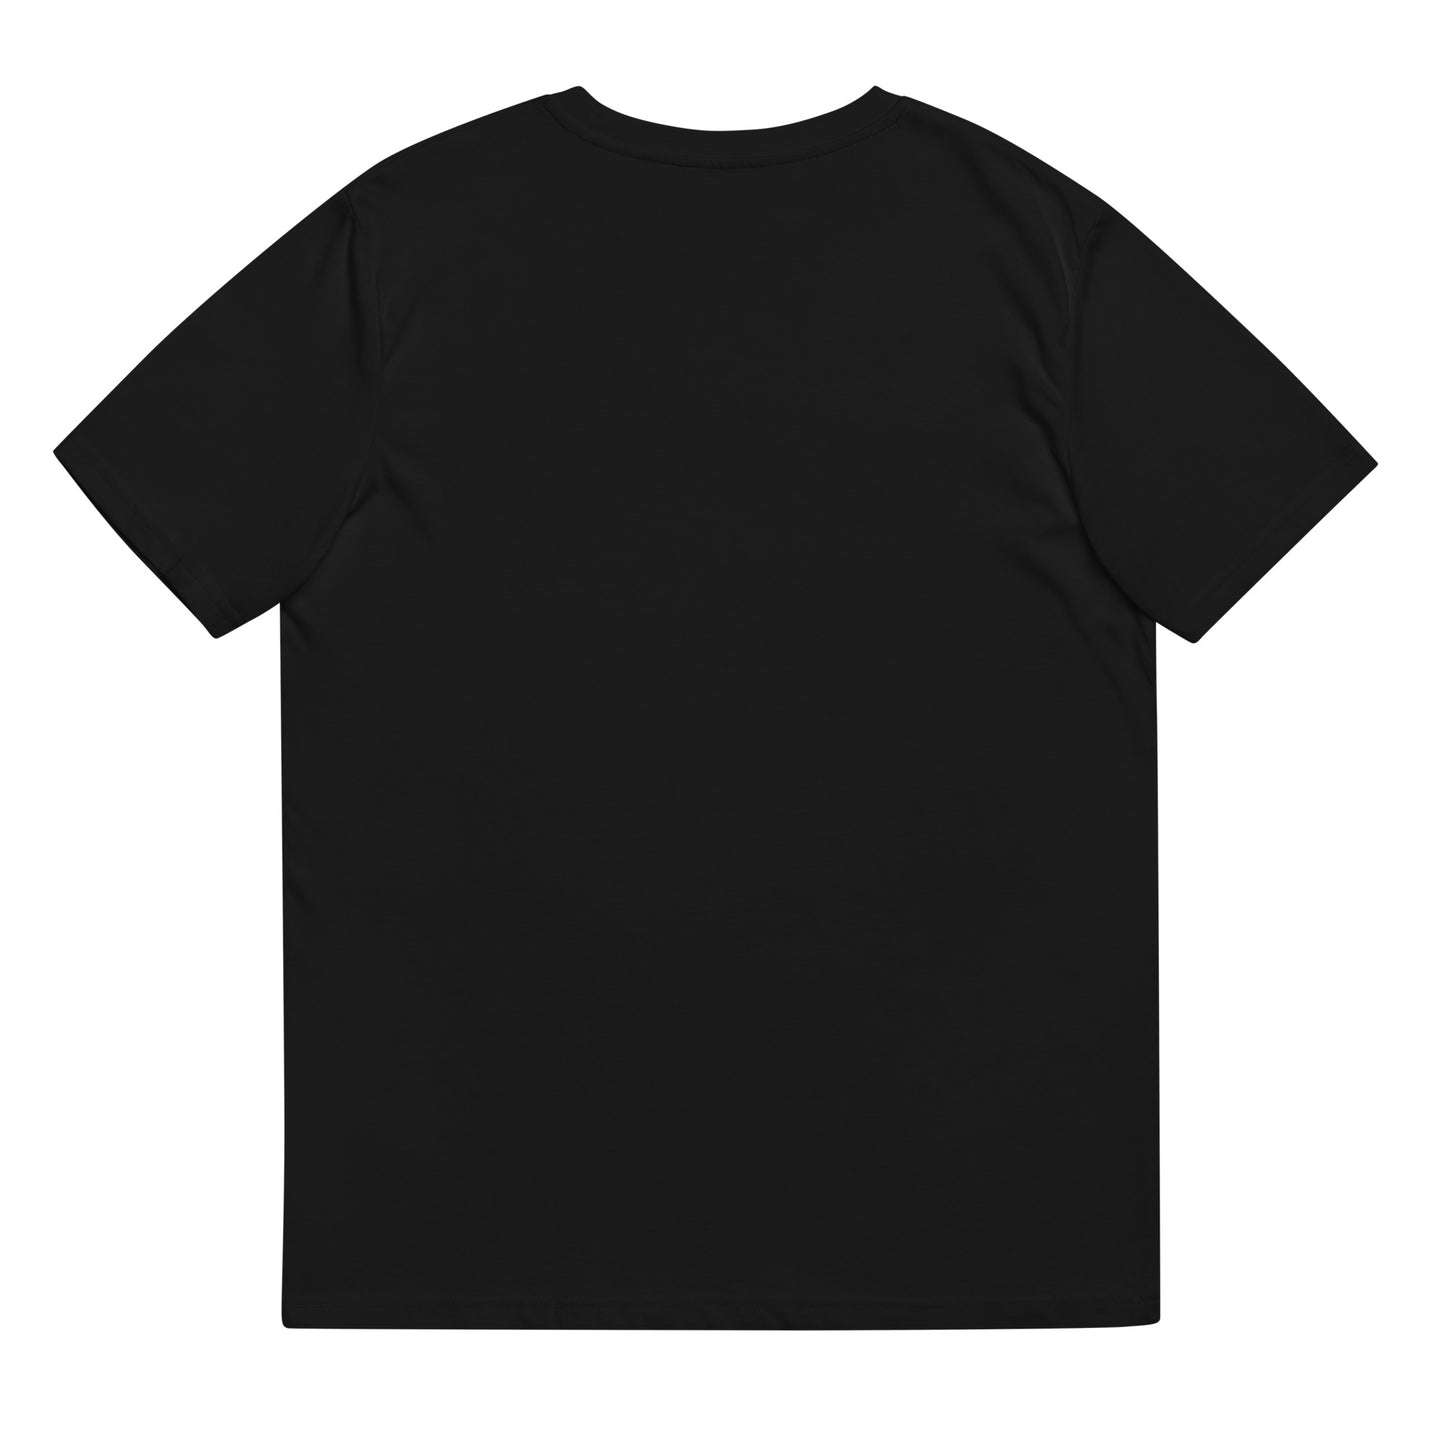 LIBERATION KILT CO Black Unisex T-Shirt White Print